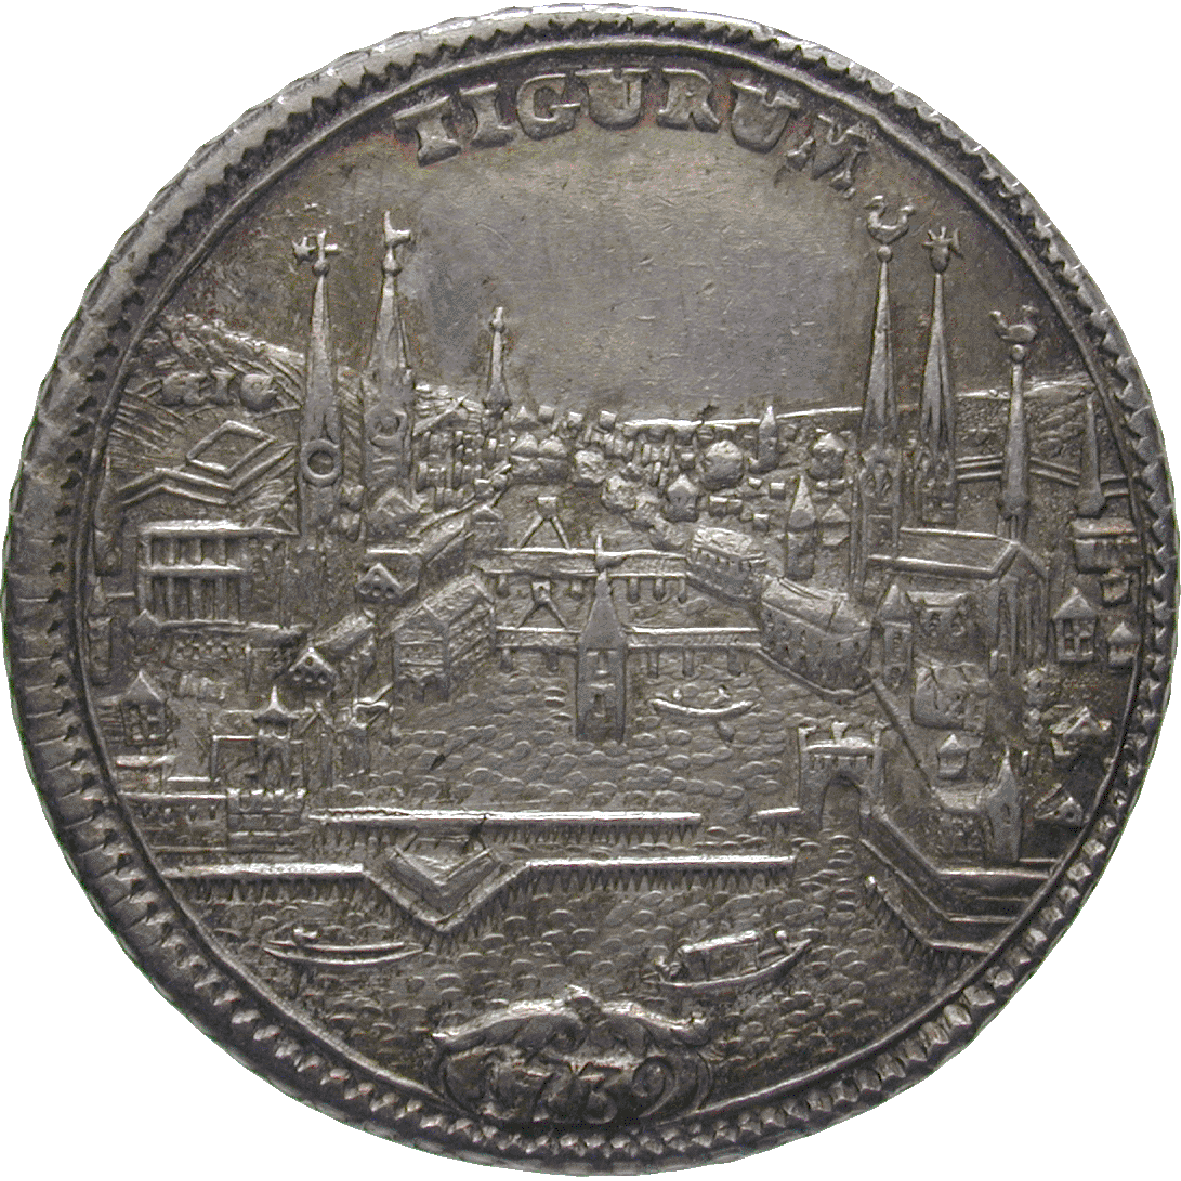 Republic of Zurich, 1/2 Taler 1739 (reverse)